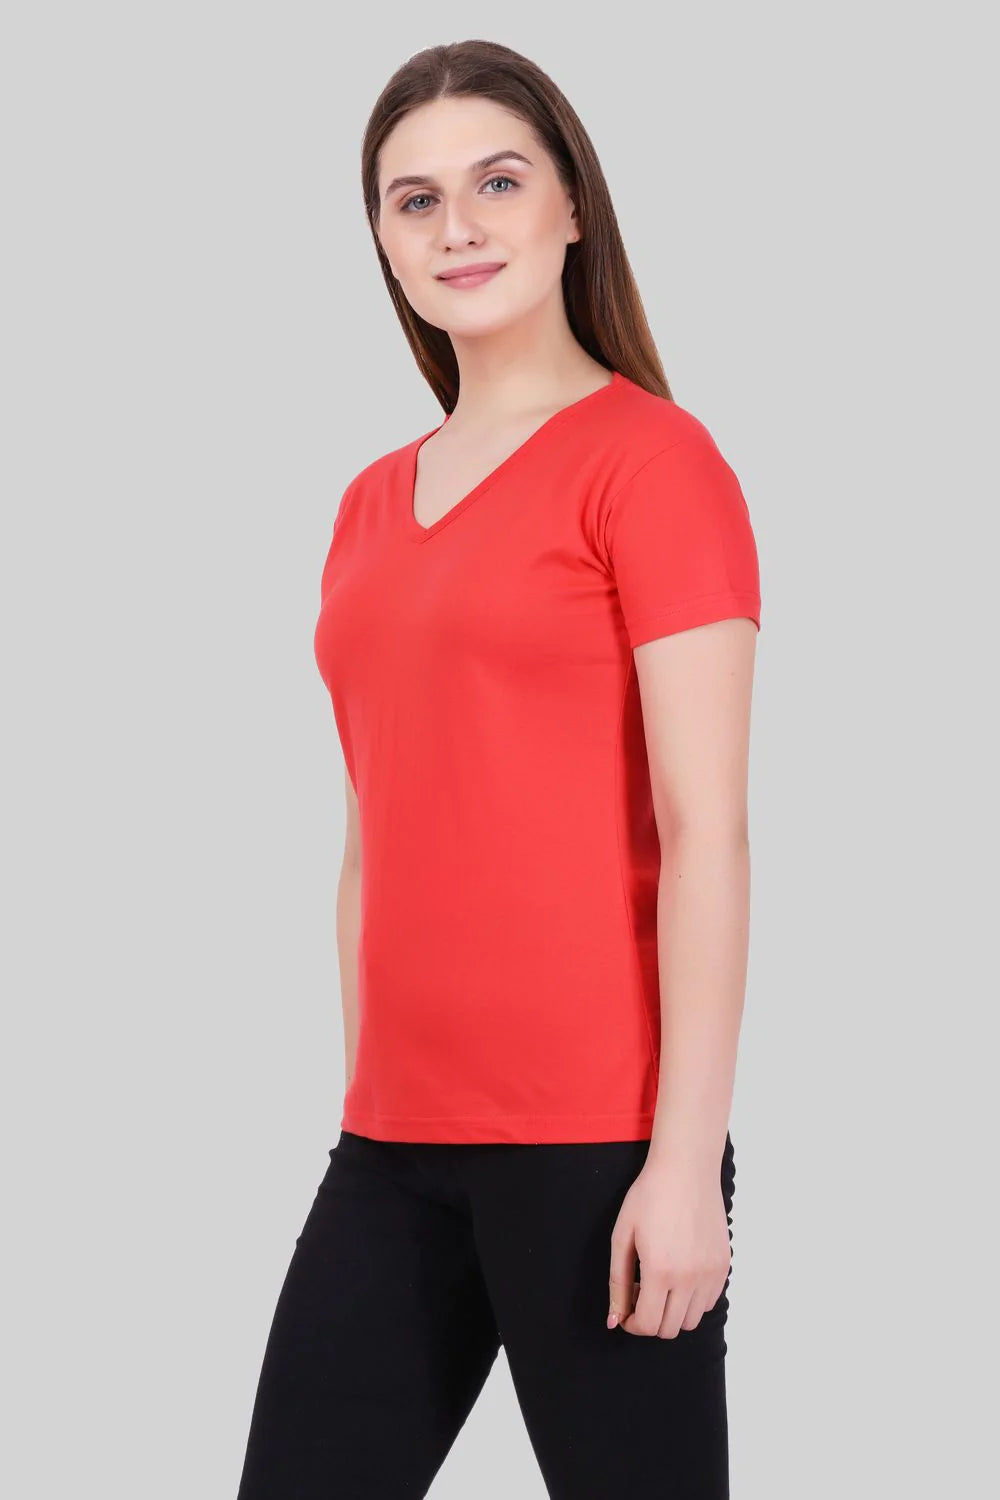 Fleximaa Women's Cotton Plain V Neck Half Sleeve T-Shirt - fleximaa-so